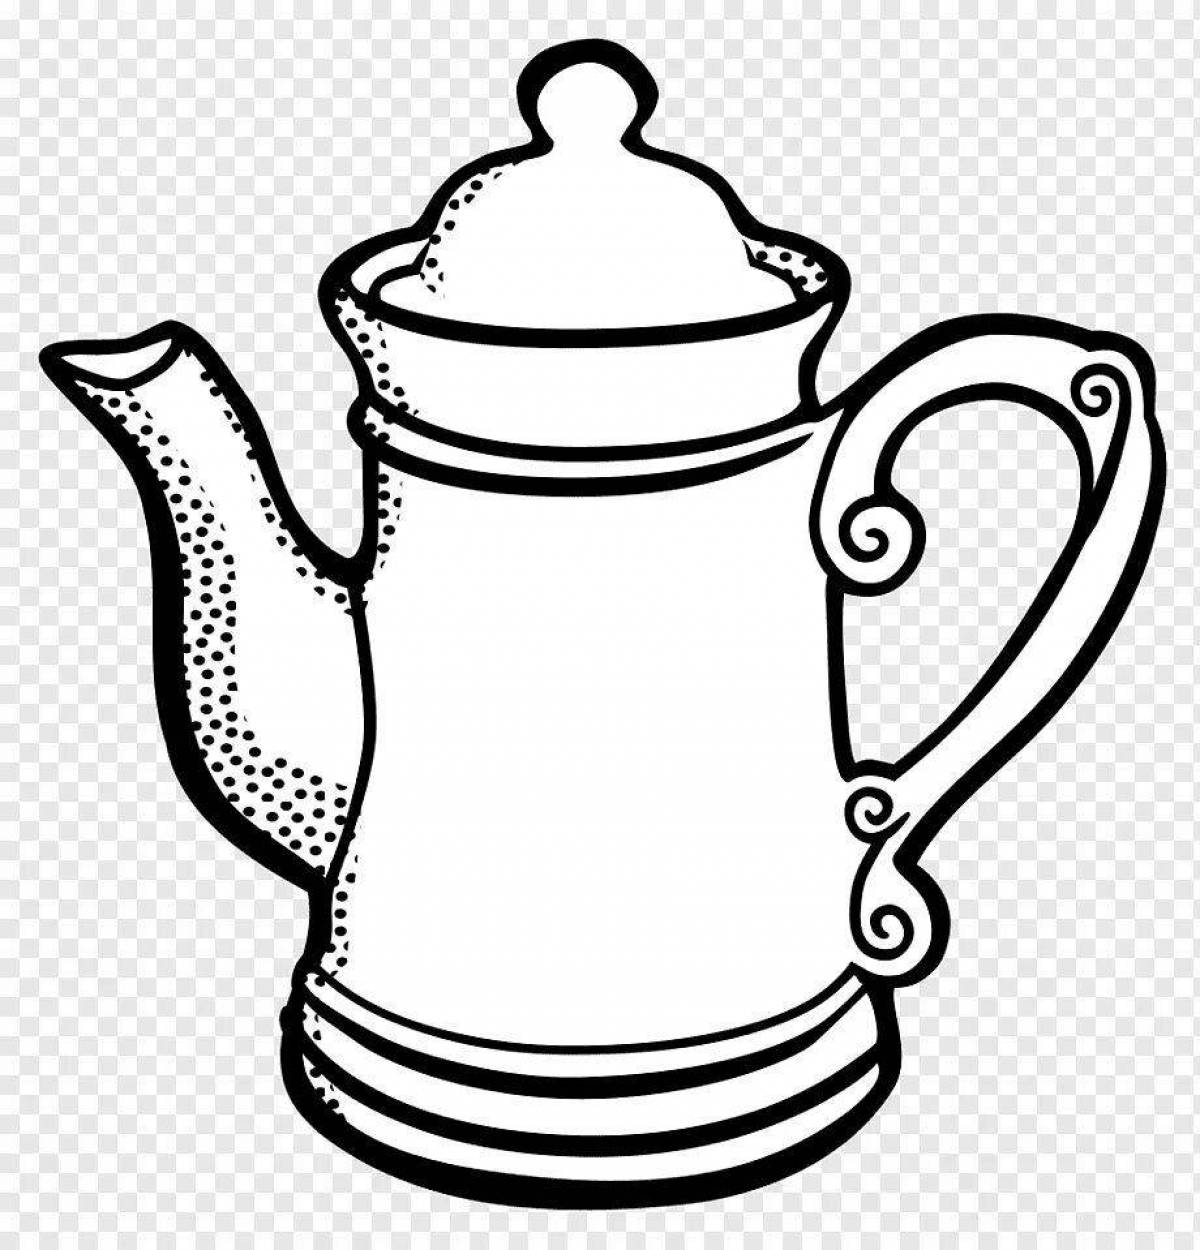 Adorable teapot and mug coloring book